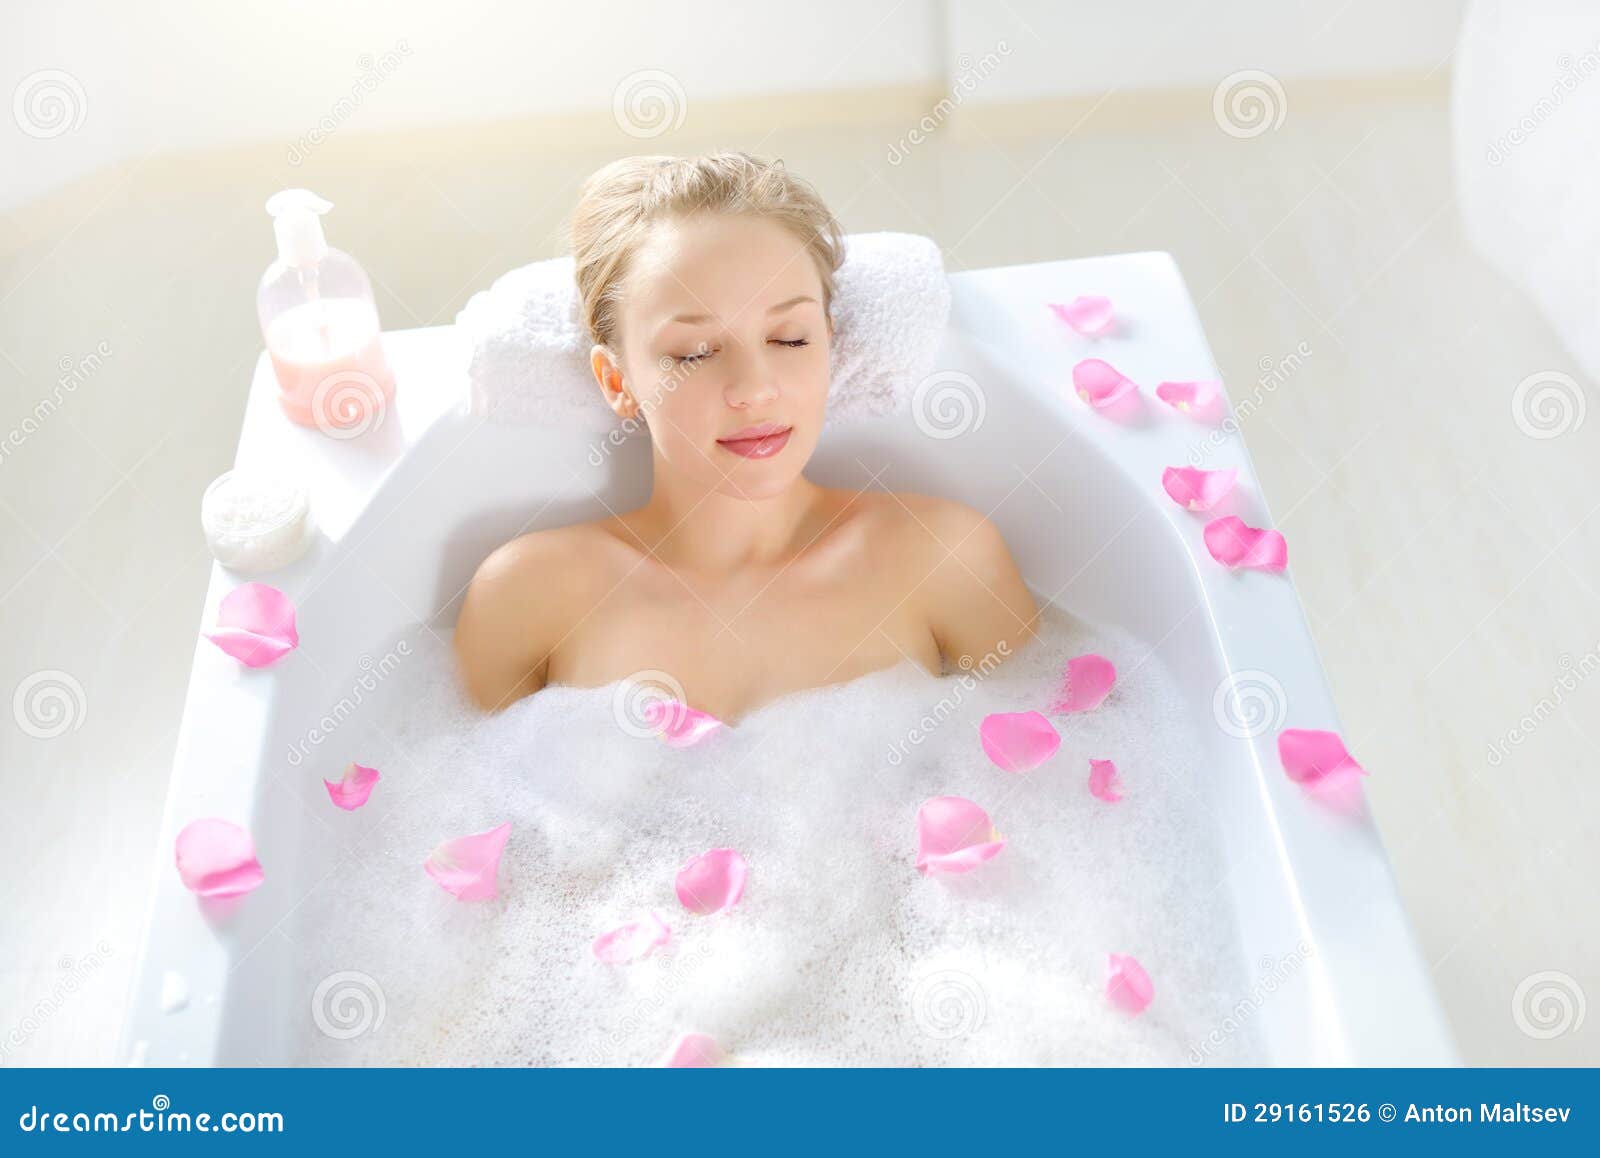 Teen girl in tub